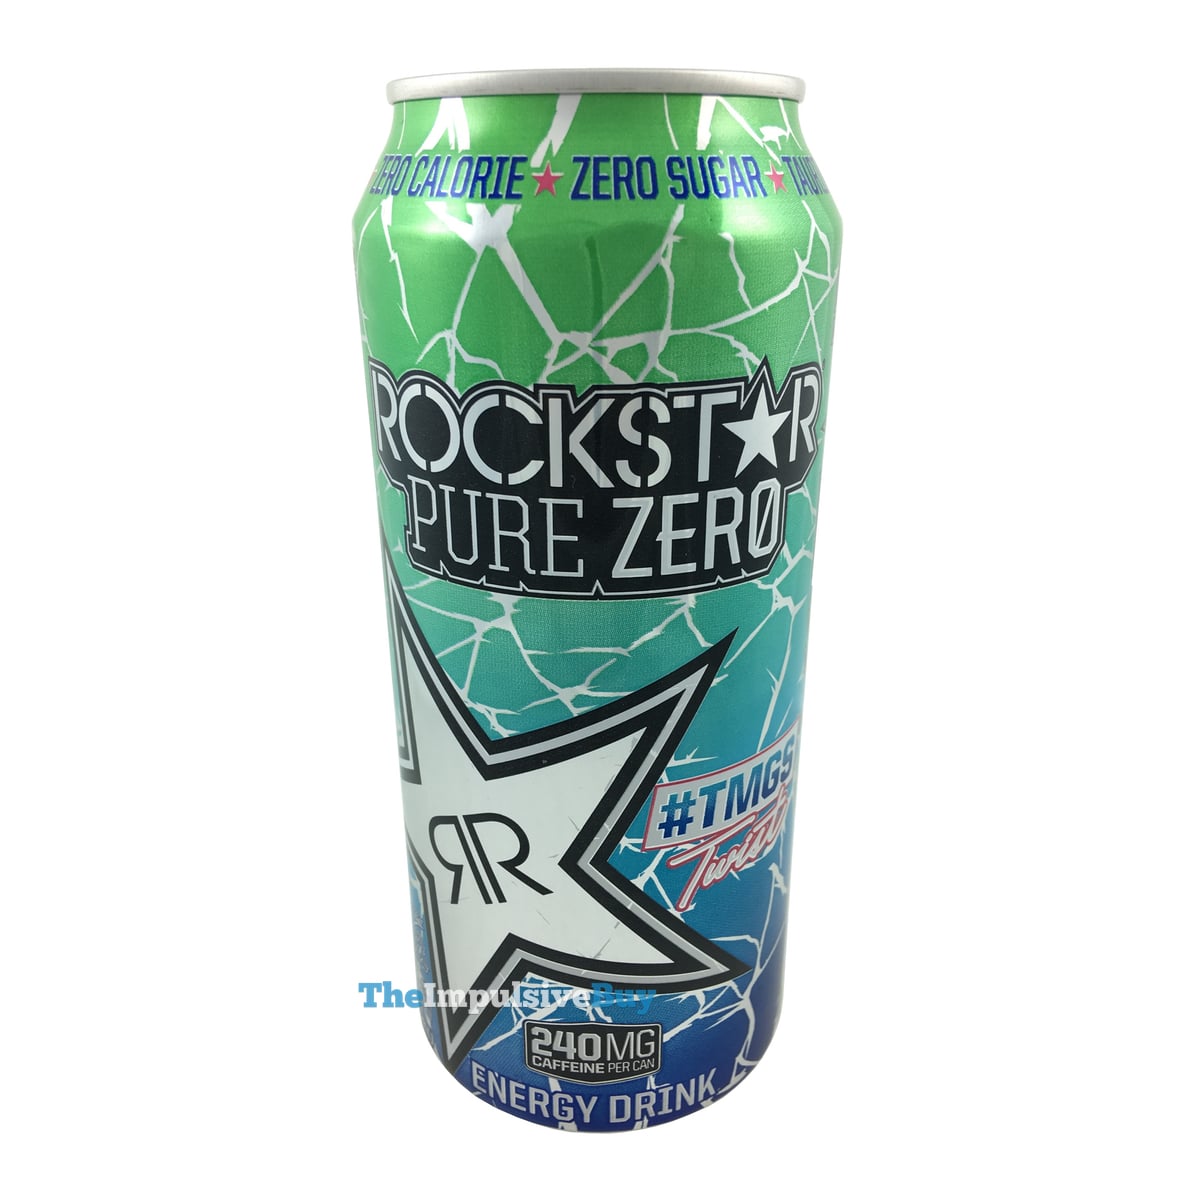 NEW ROCKSTAR PURE ZERO #TMGS TWIST ENERGY DRINK 16 FLOZ FULL CAN EXCLUSIVE BUYIT 